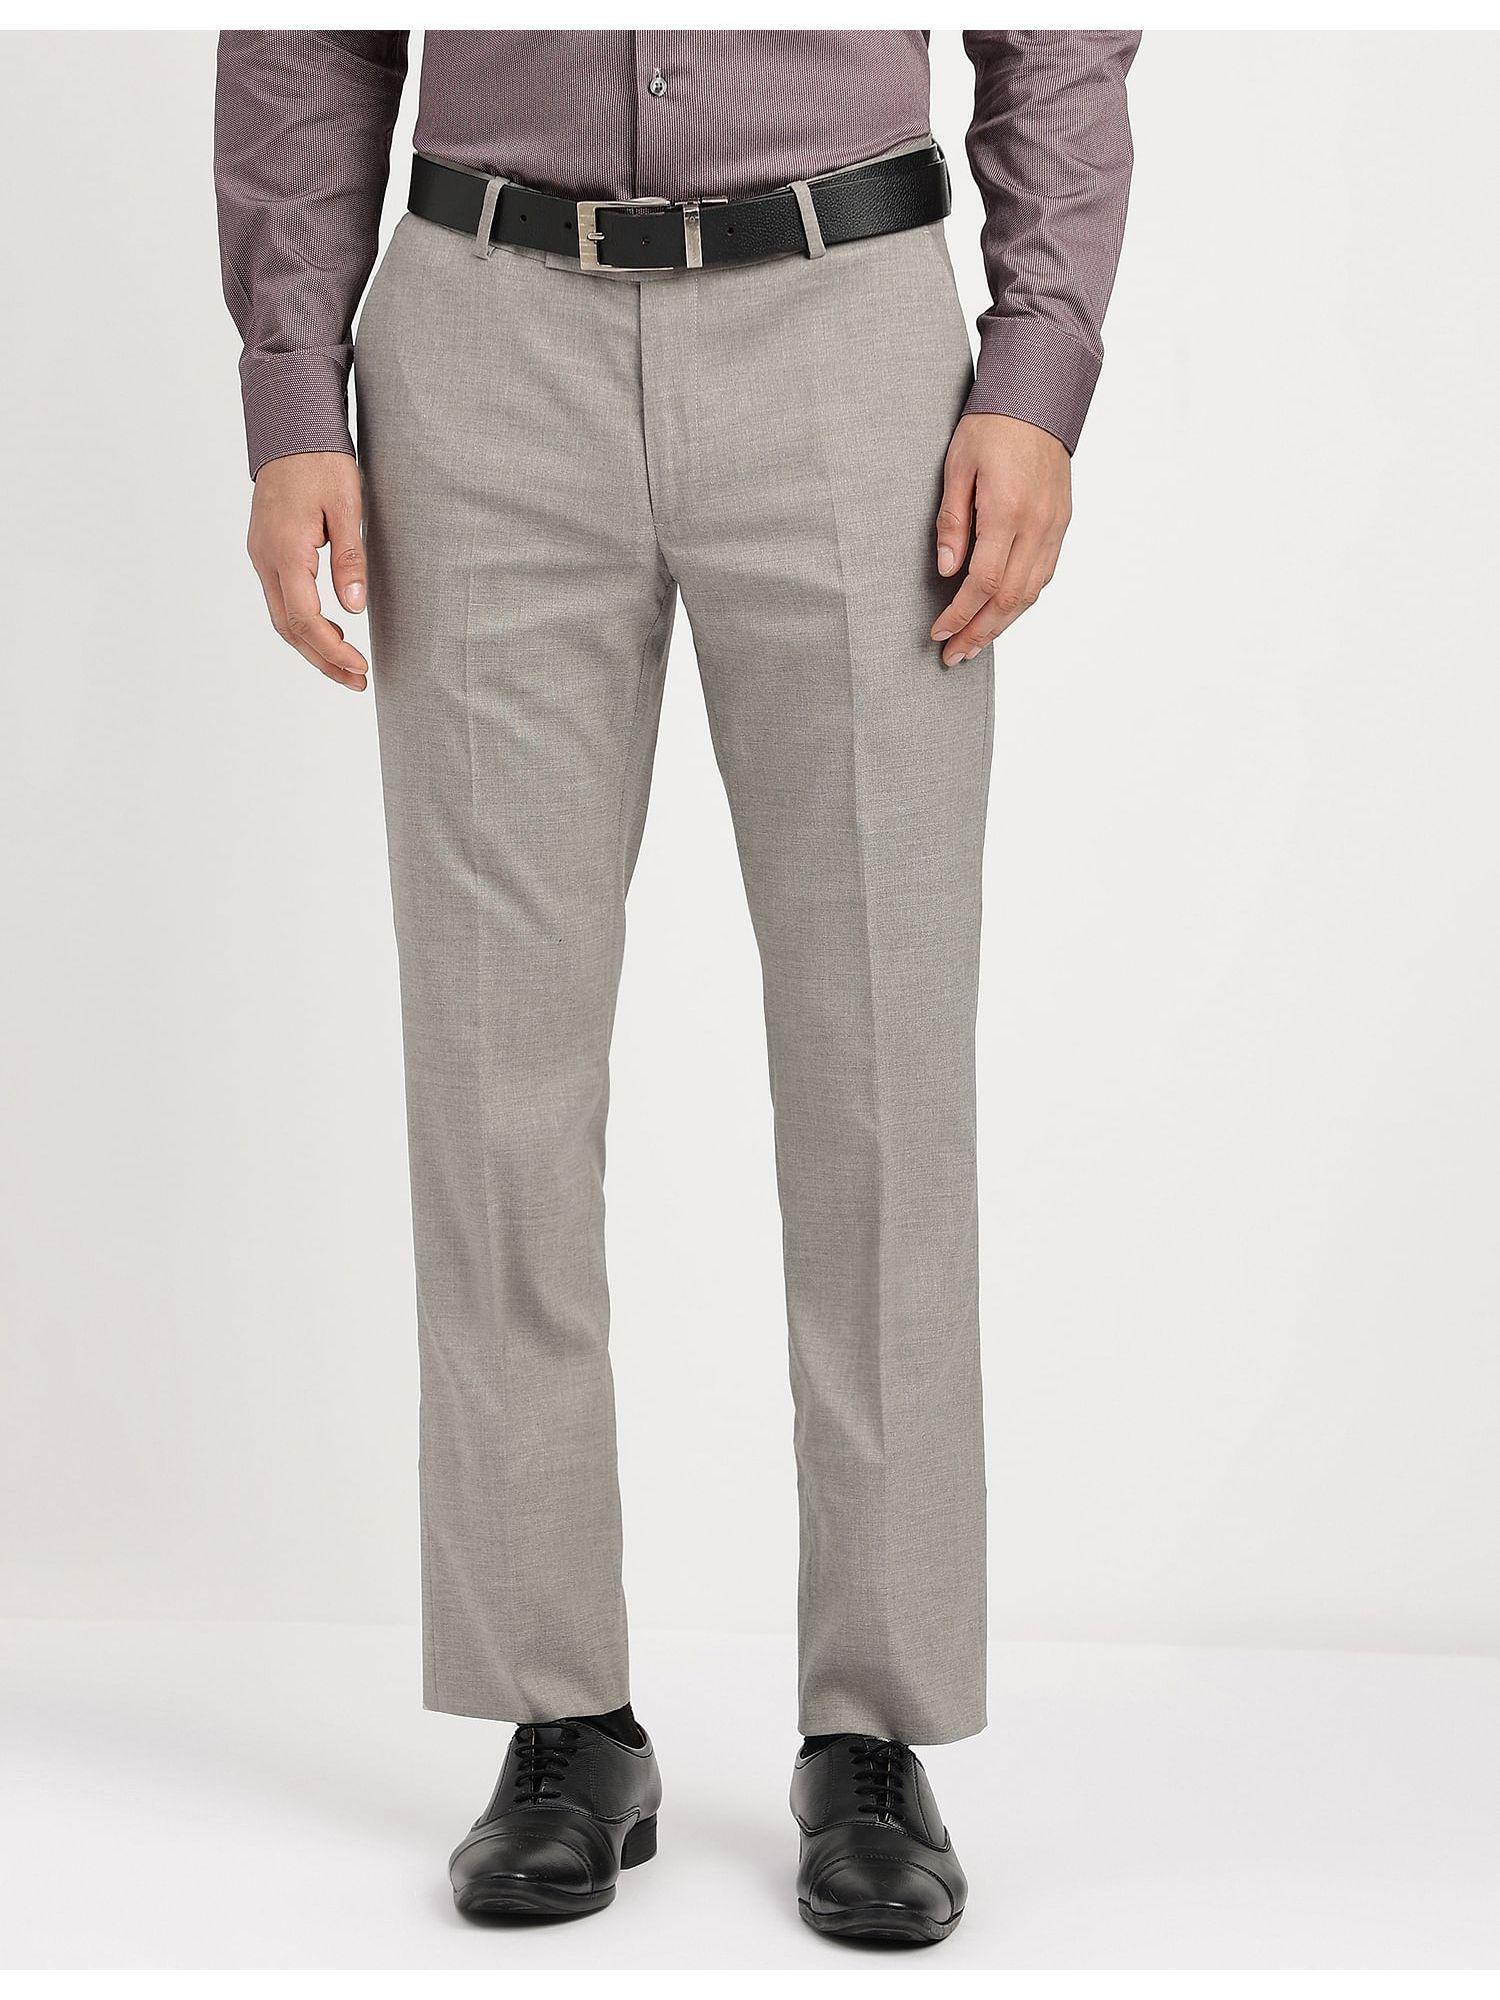 grey-dobby-heathered-trousers